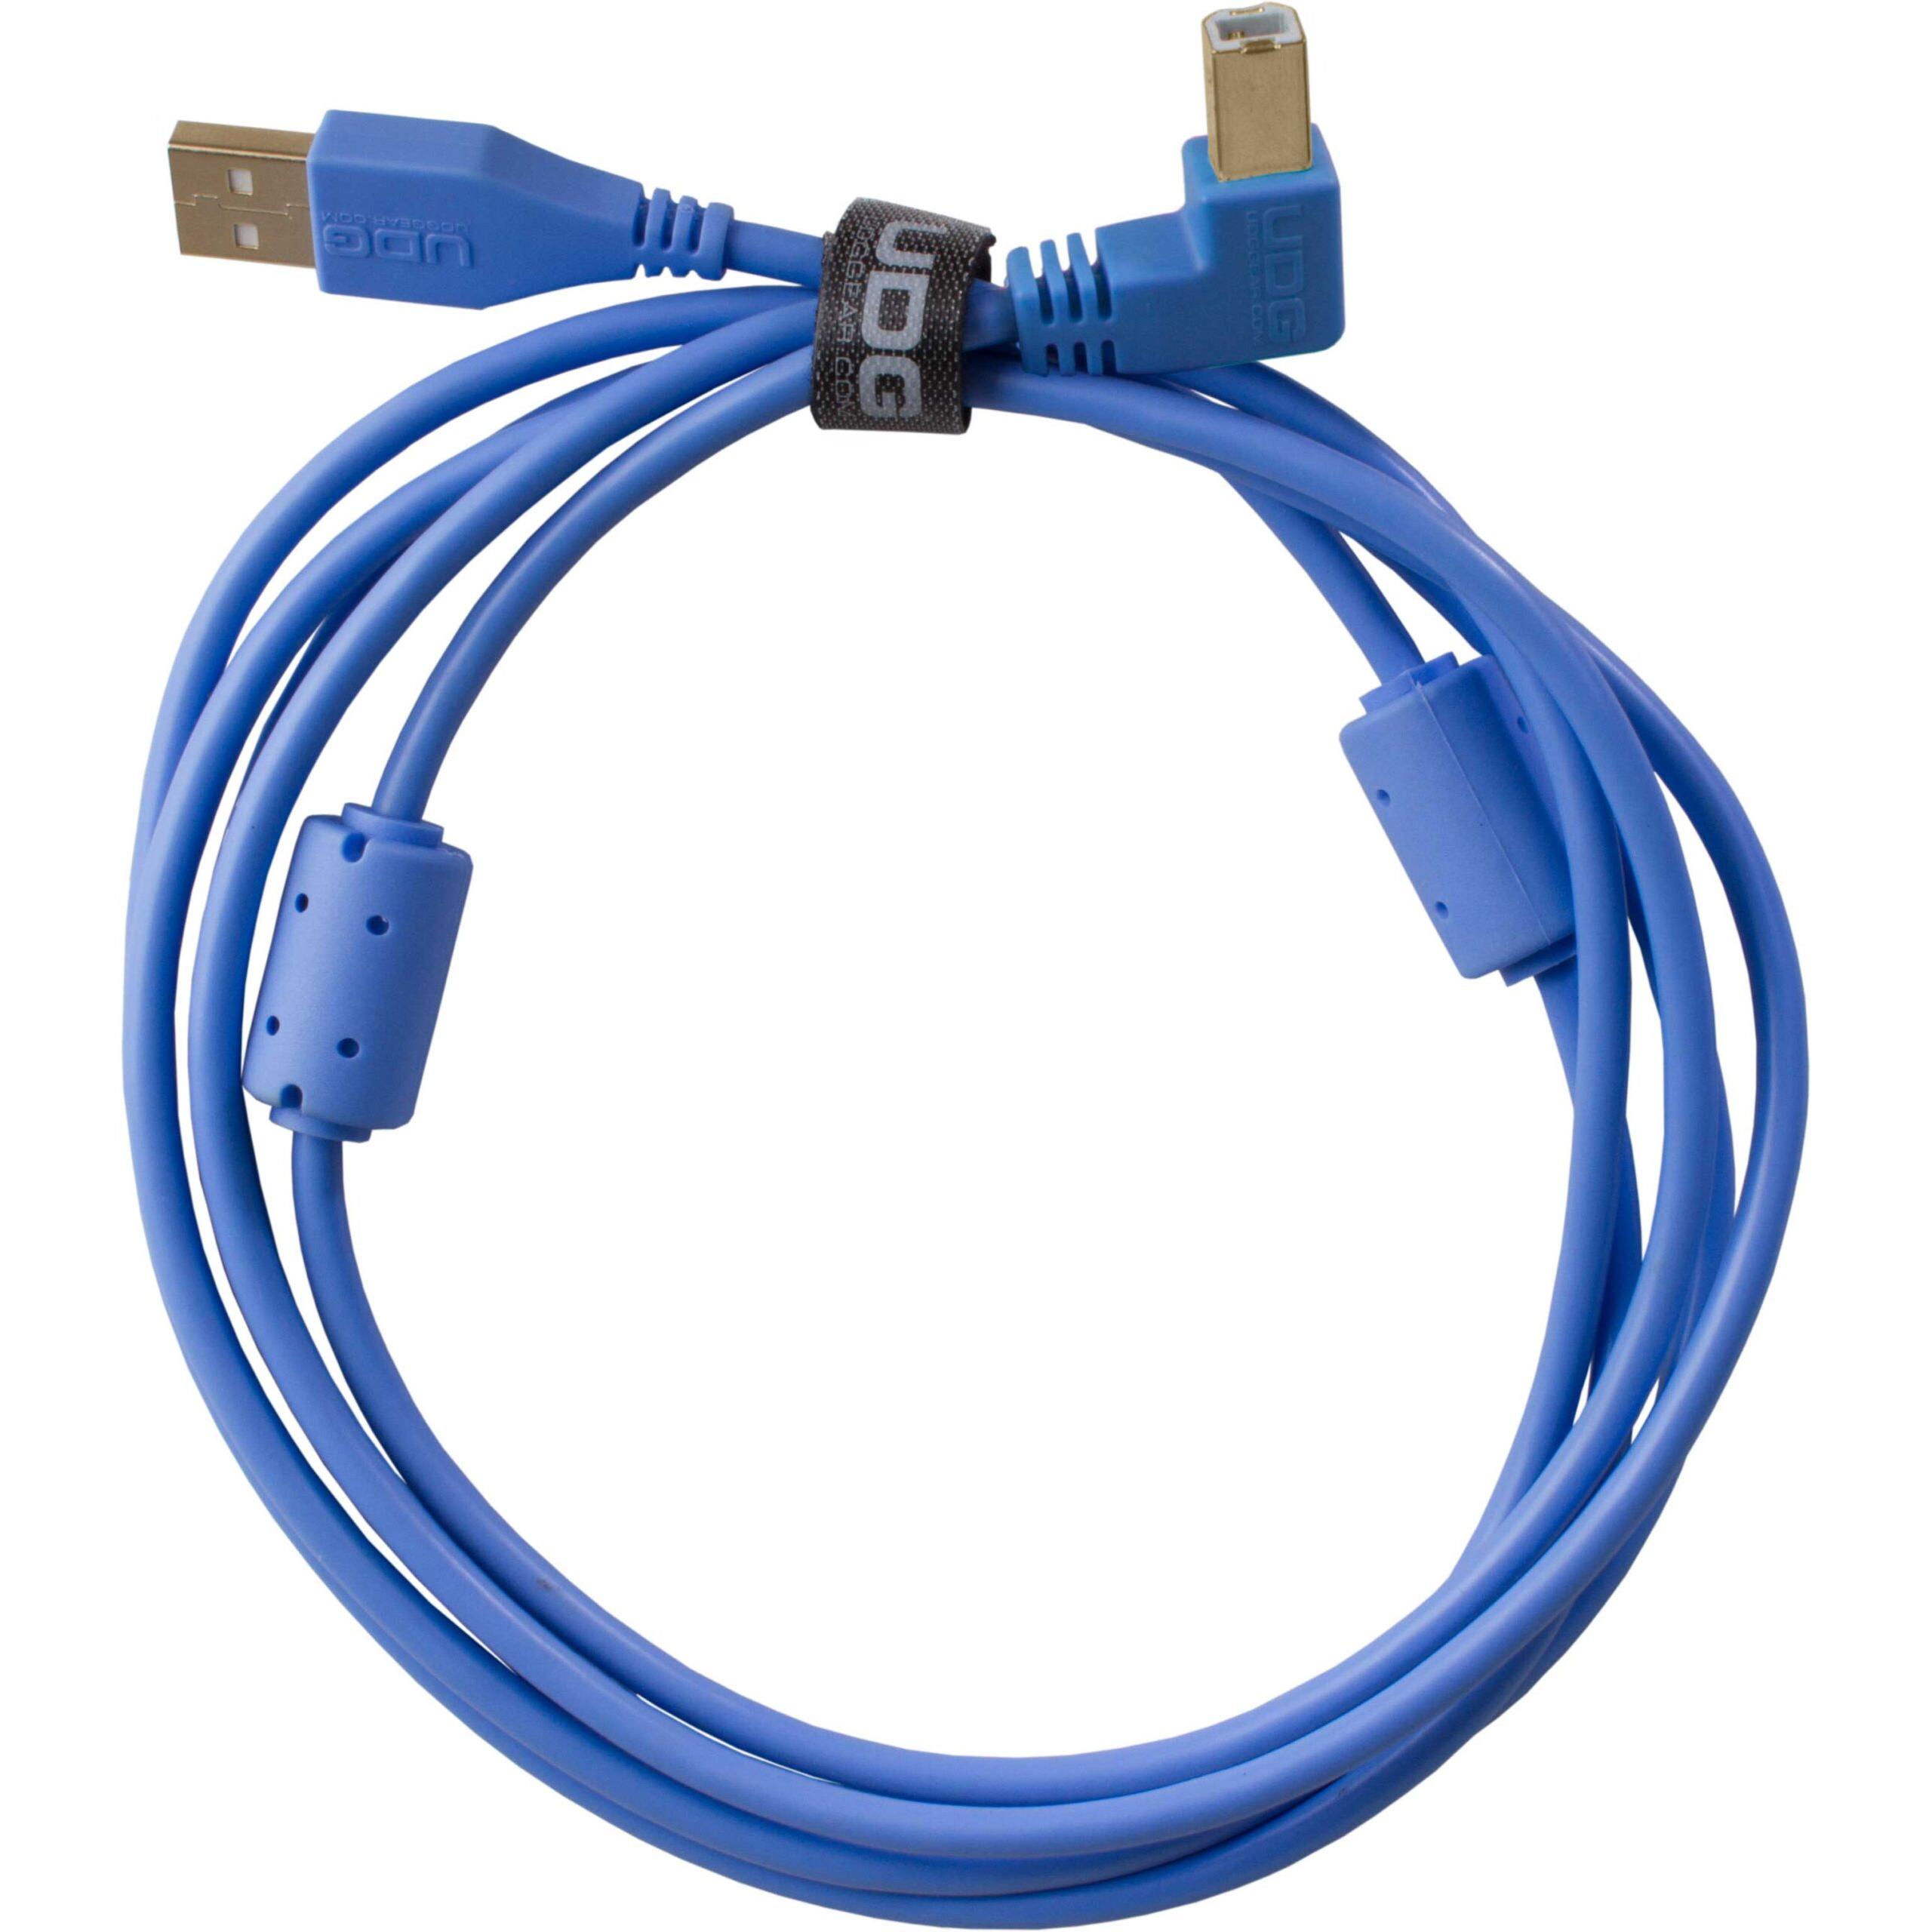 UDG U95006LB - ULTIMATE AUDIO CABLE USB 2.0 A-B BLUE ANGLED 3M